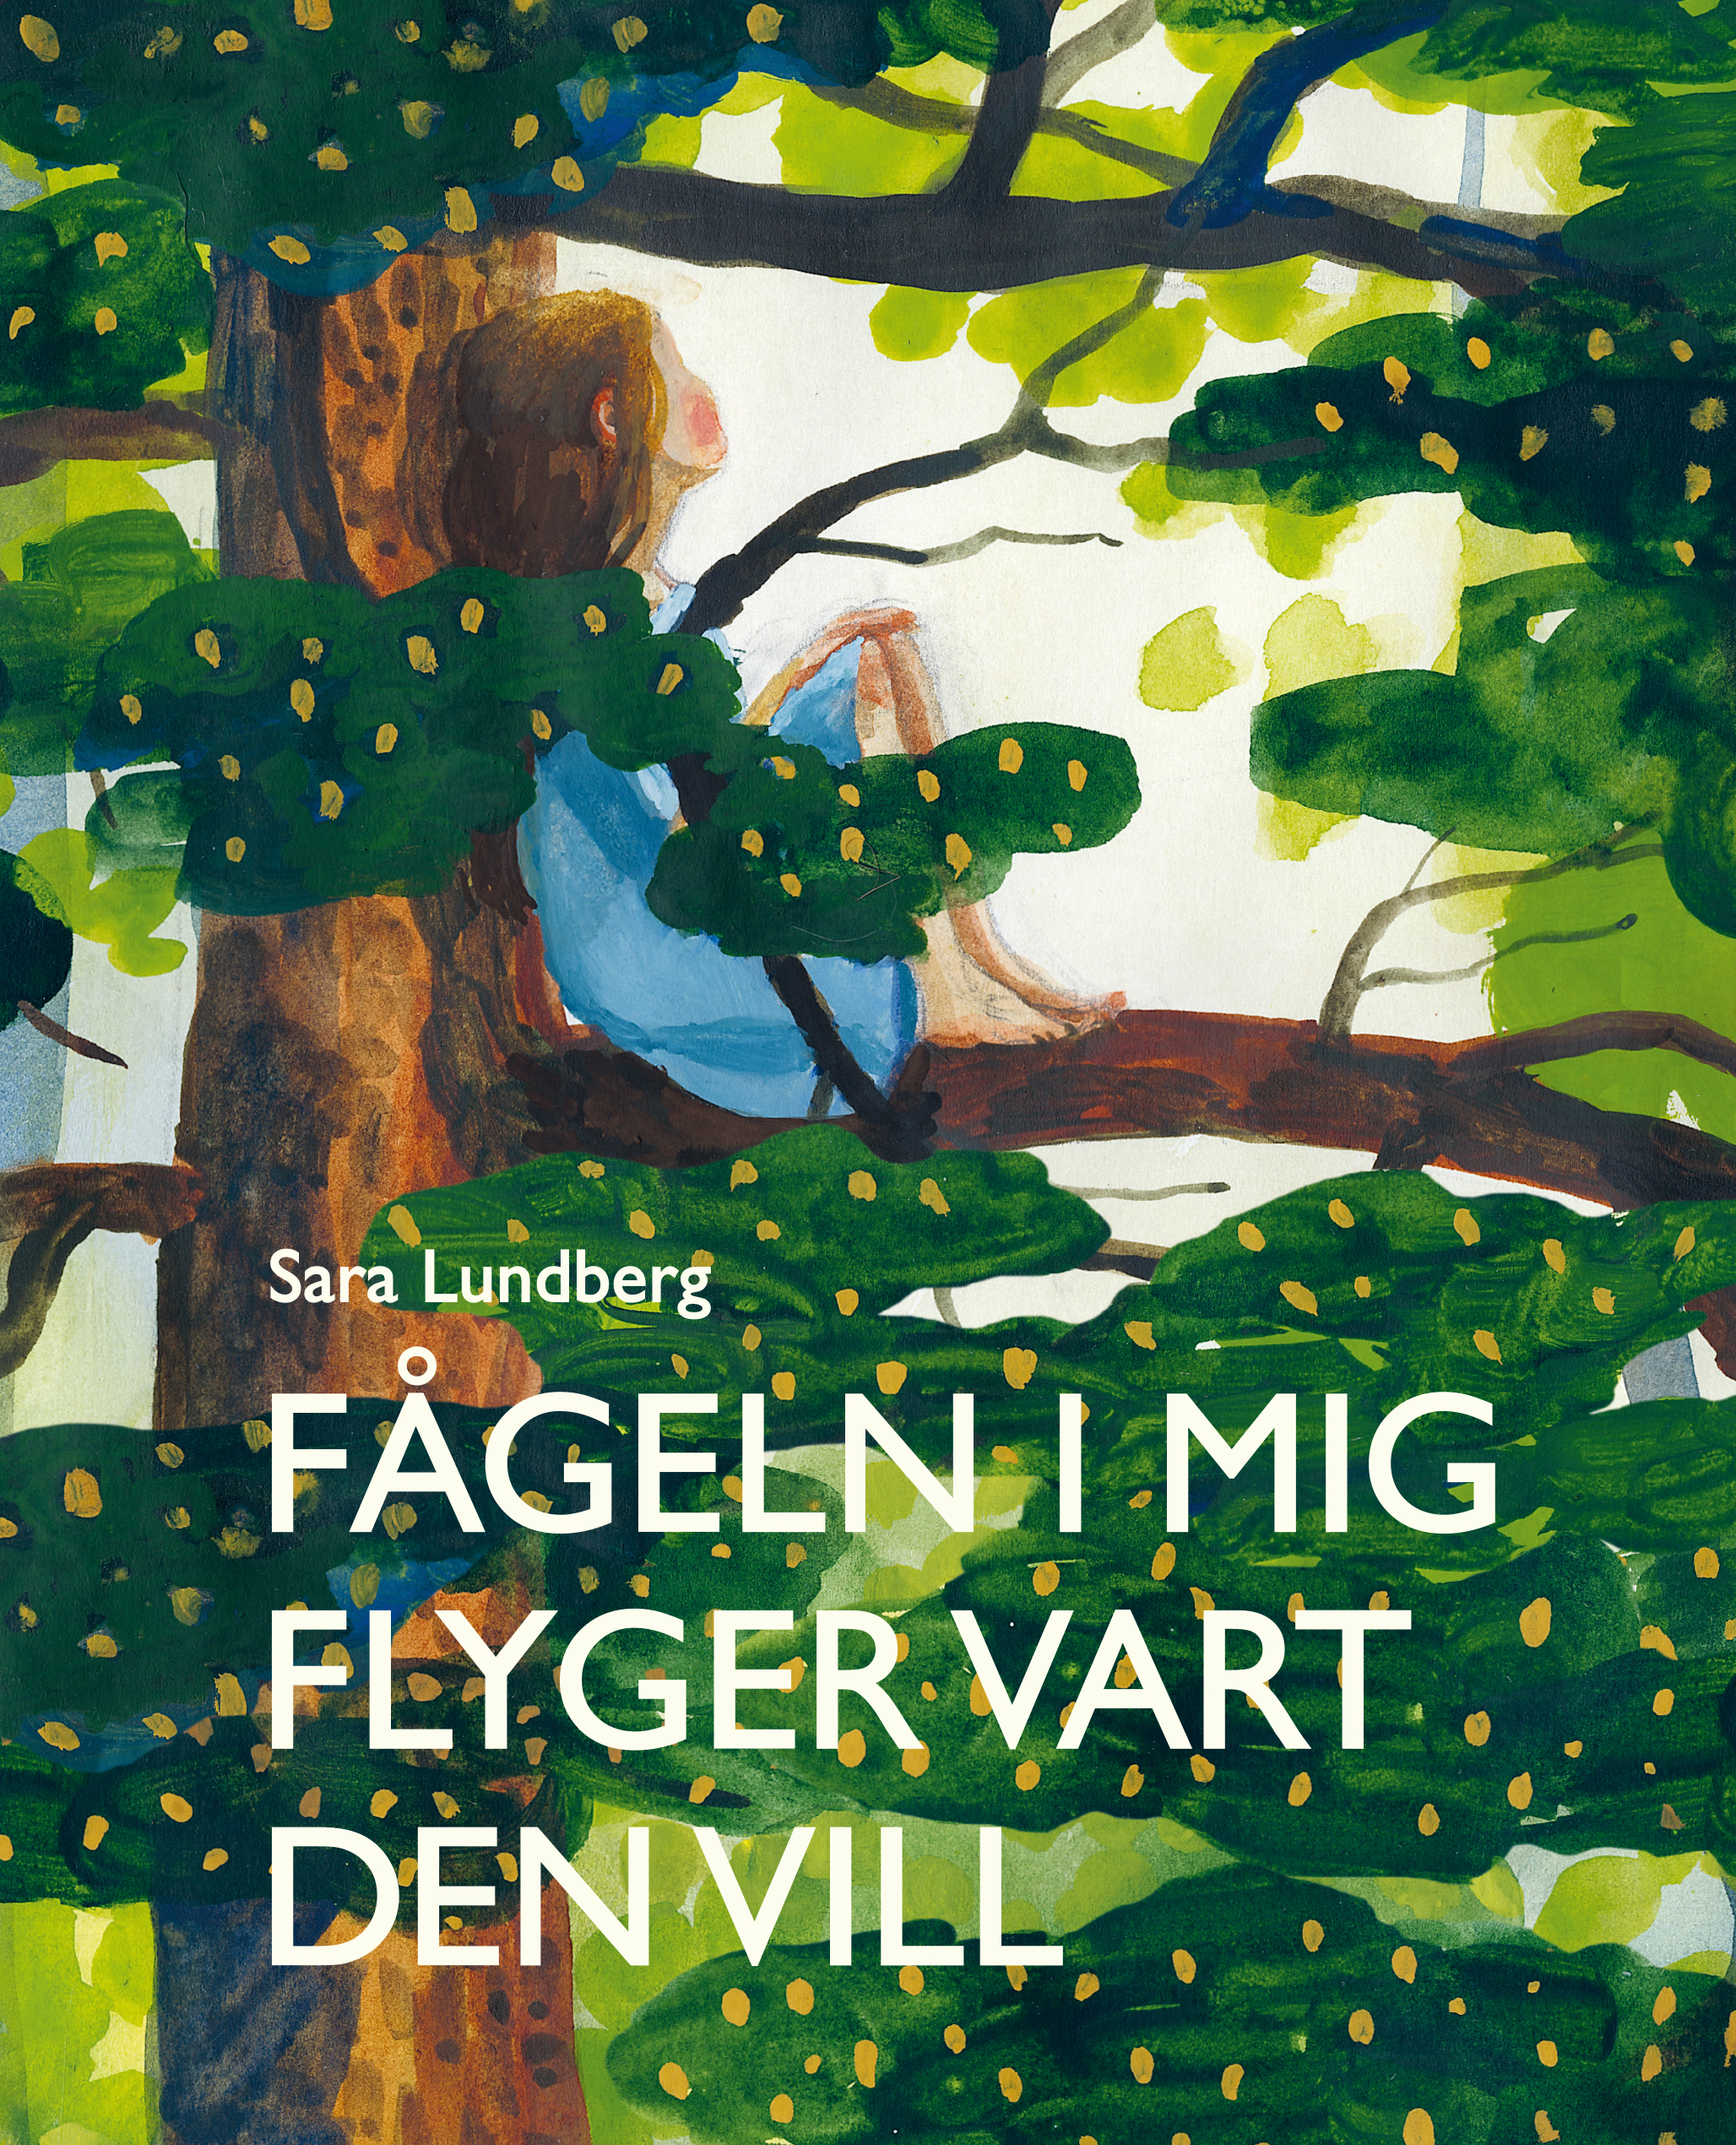 Book Cover of Fågeln i mig flyger vart den vill by Sarah Lundberg: Girl sitting in a tree